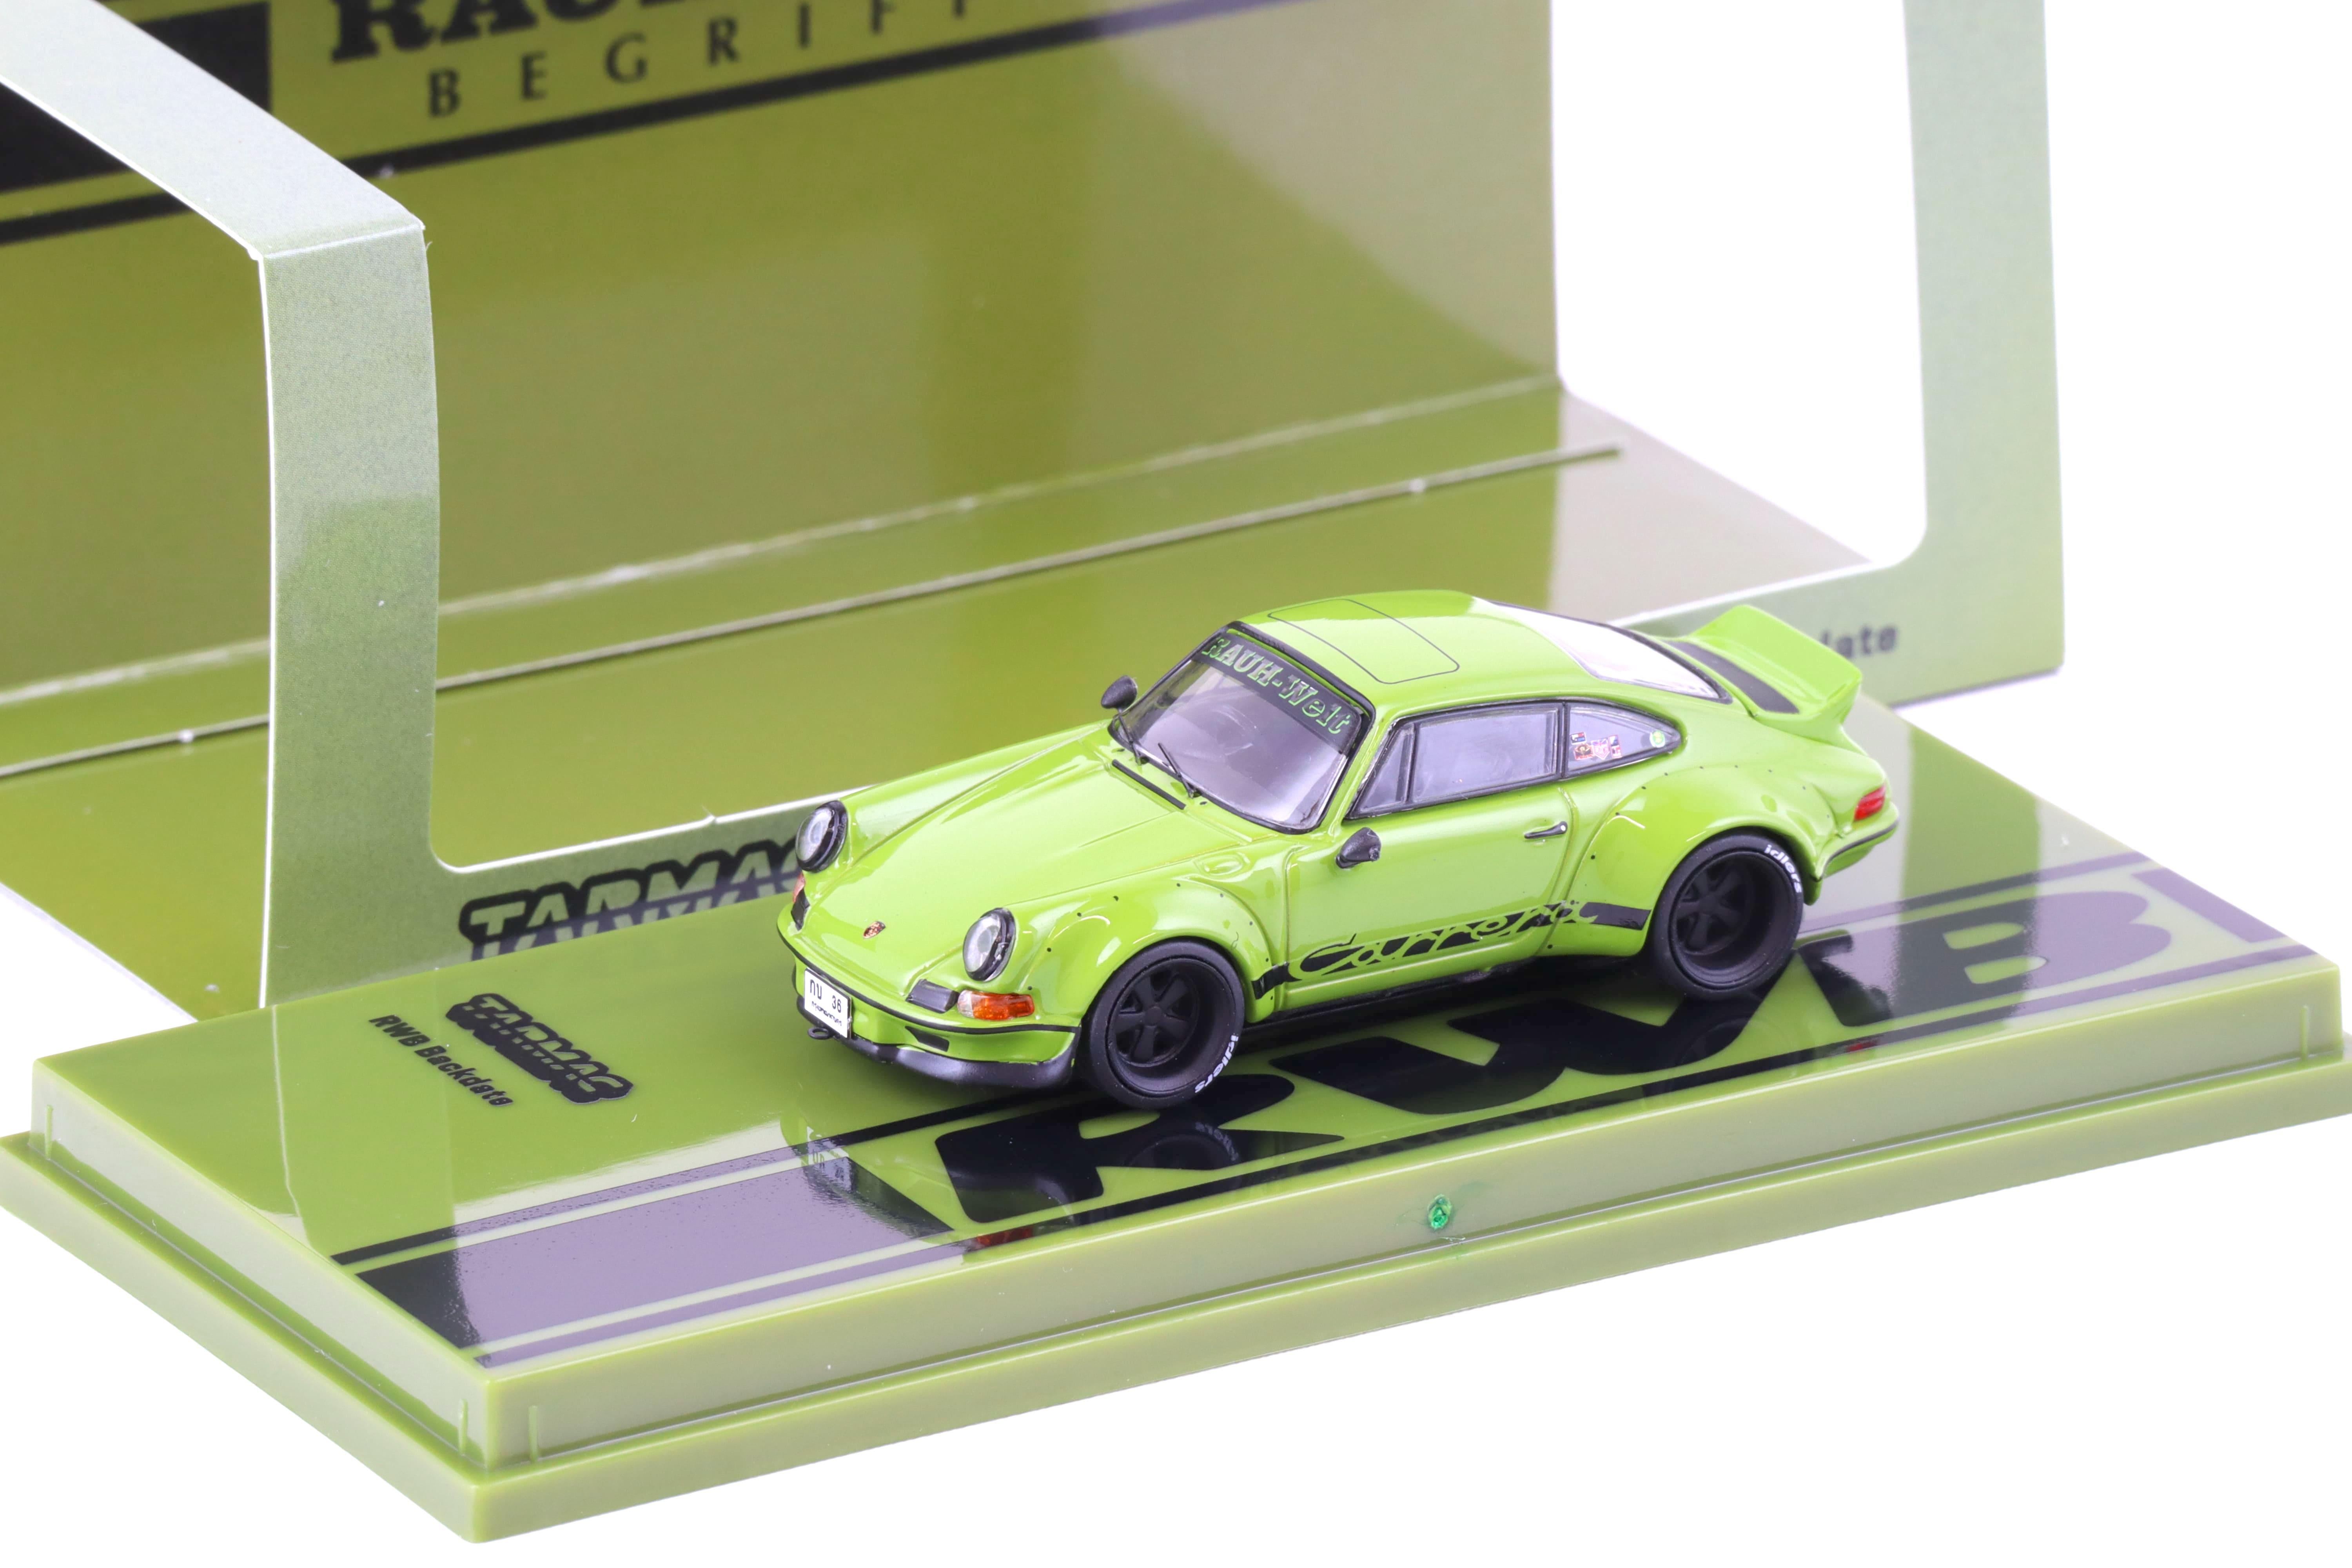 1:64 Tarmac Works Porsche 911 RWB Backdate olive green